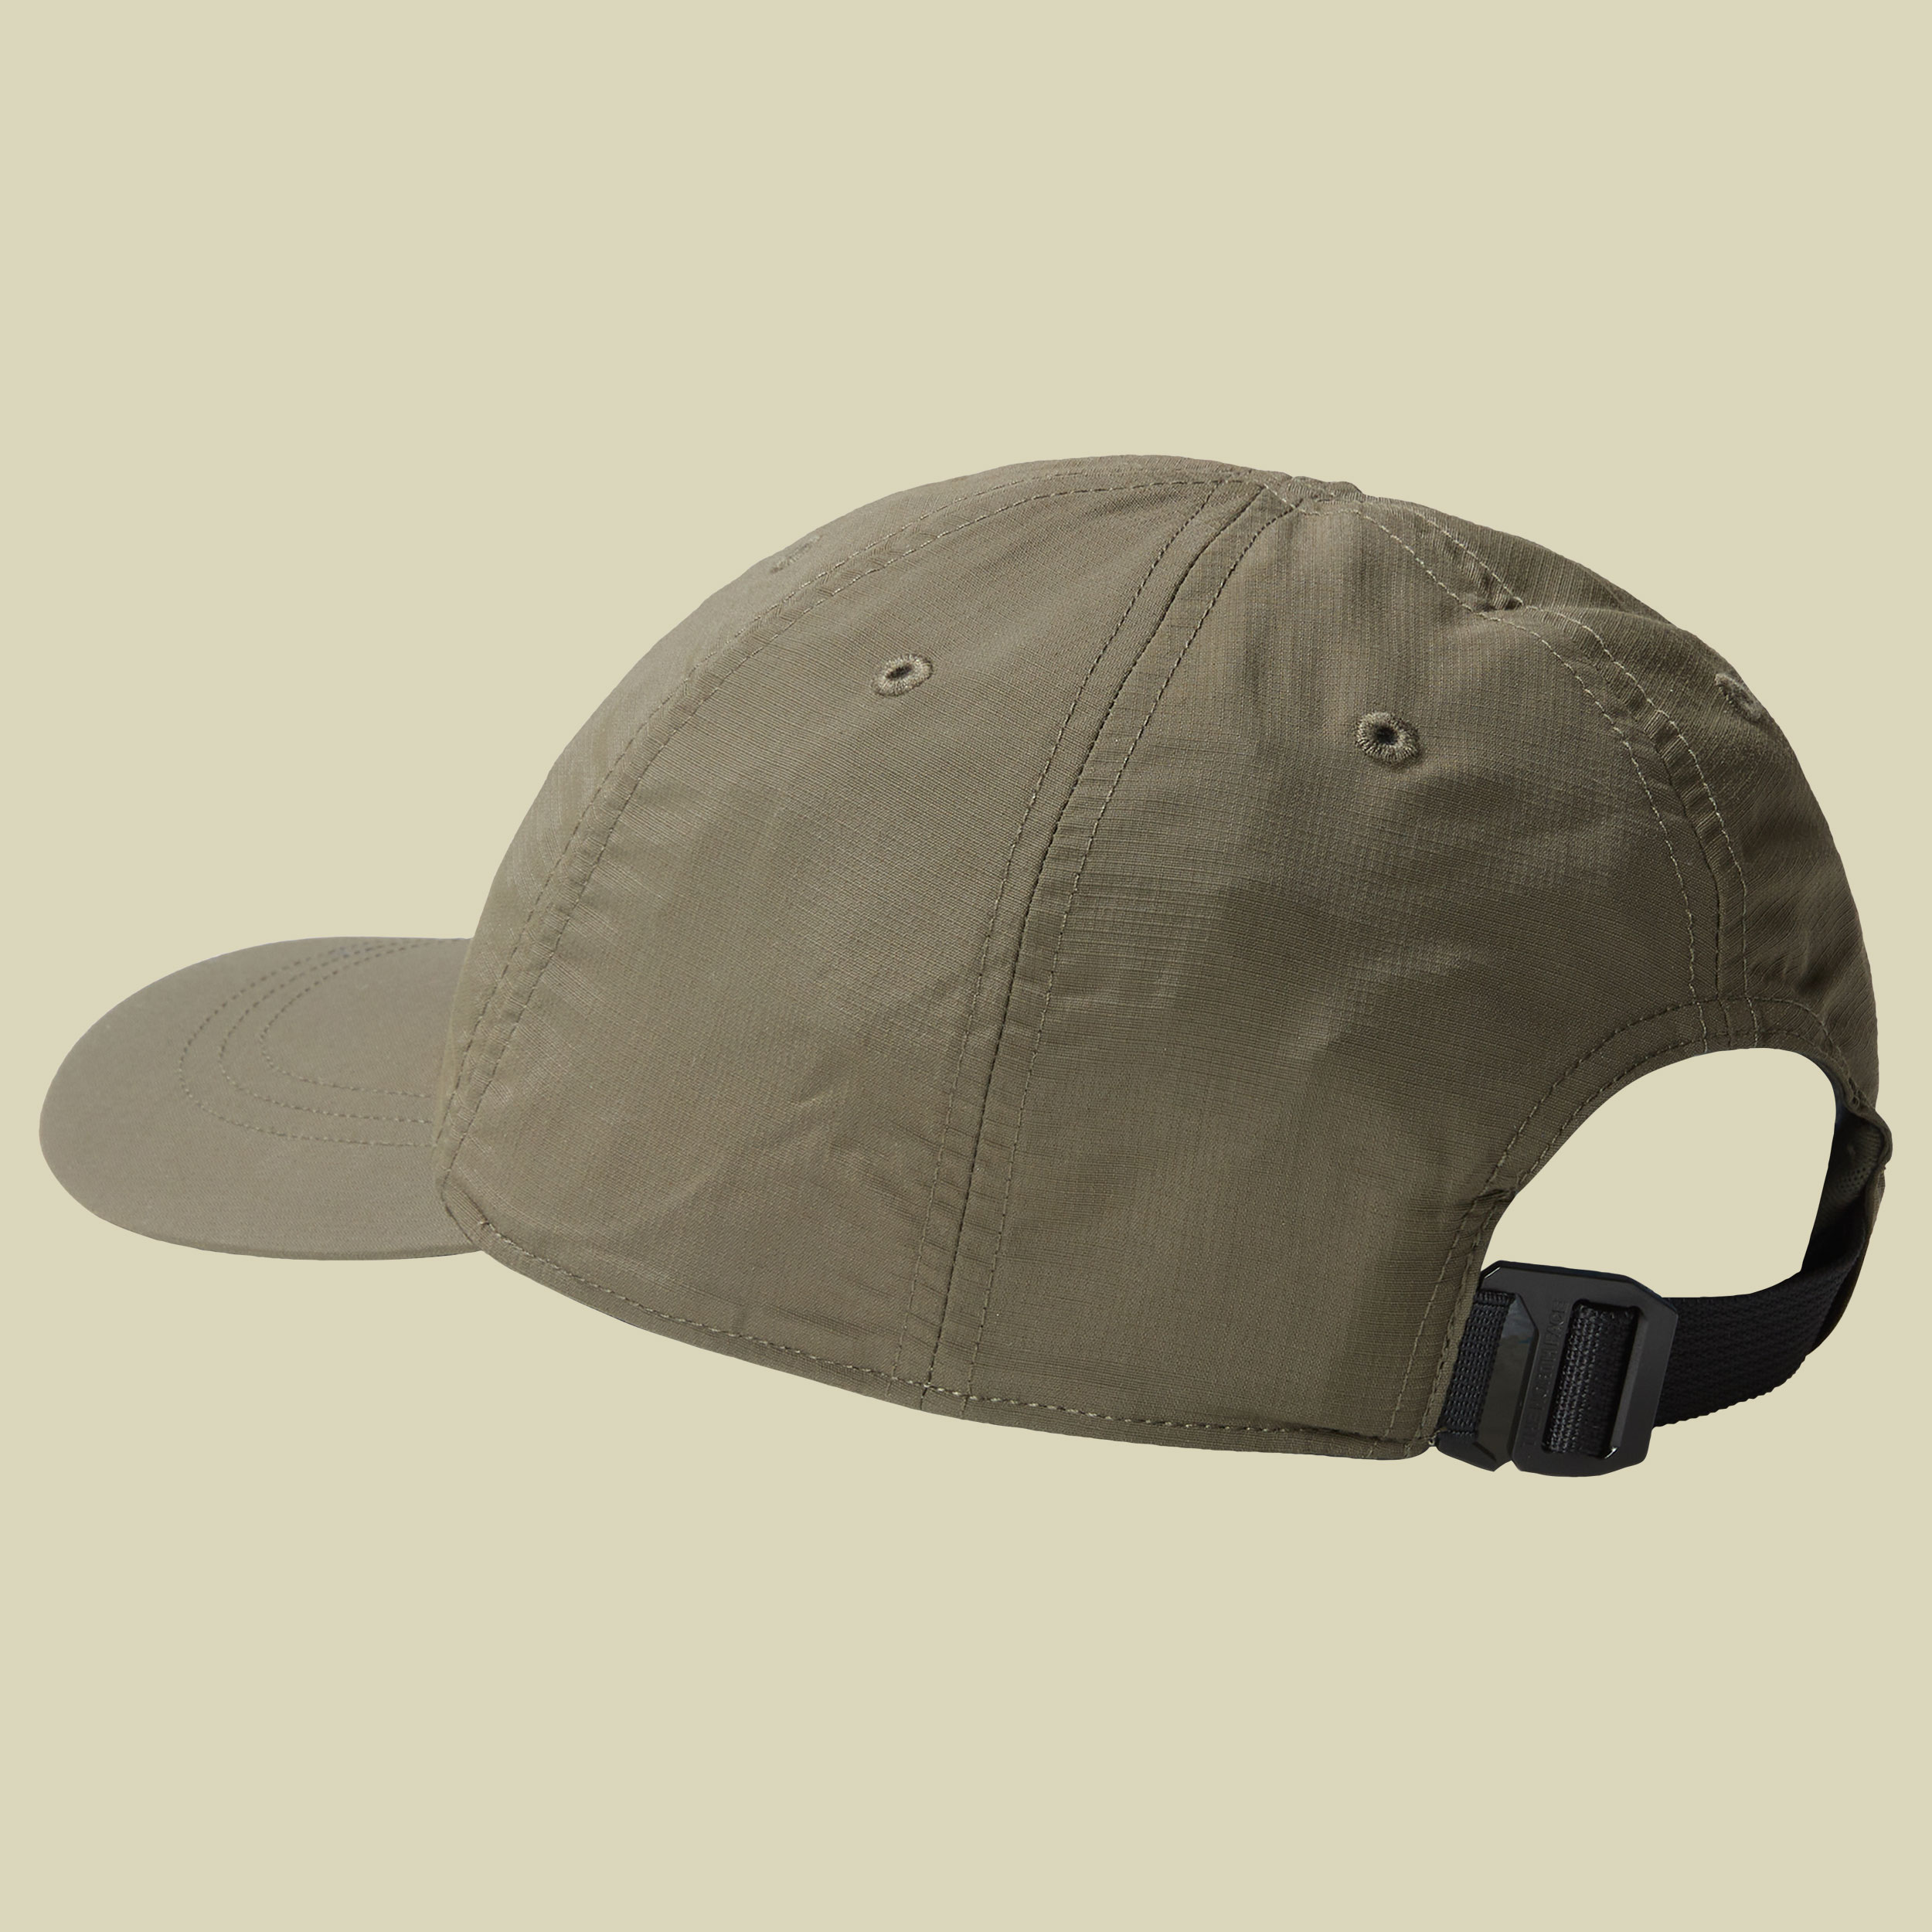 Horizon Hat one size grün - new taupe green